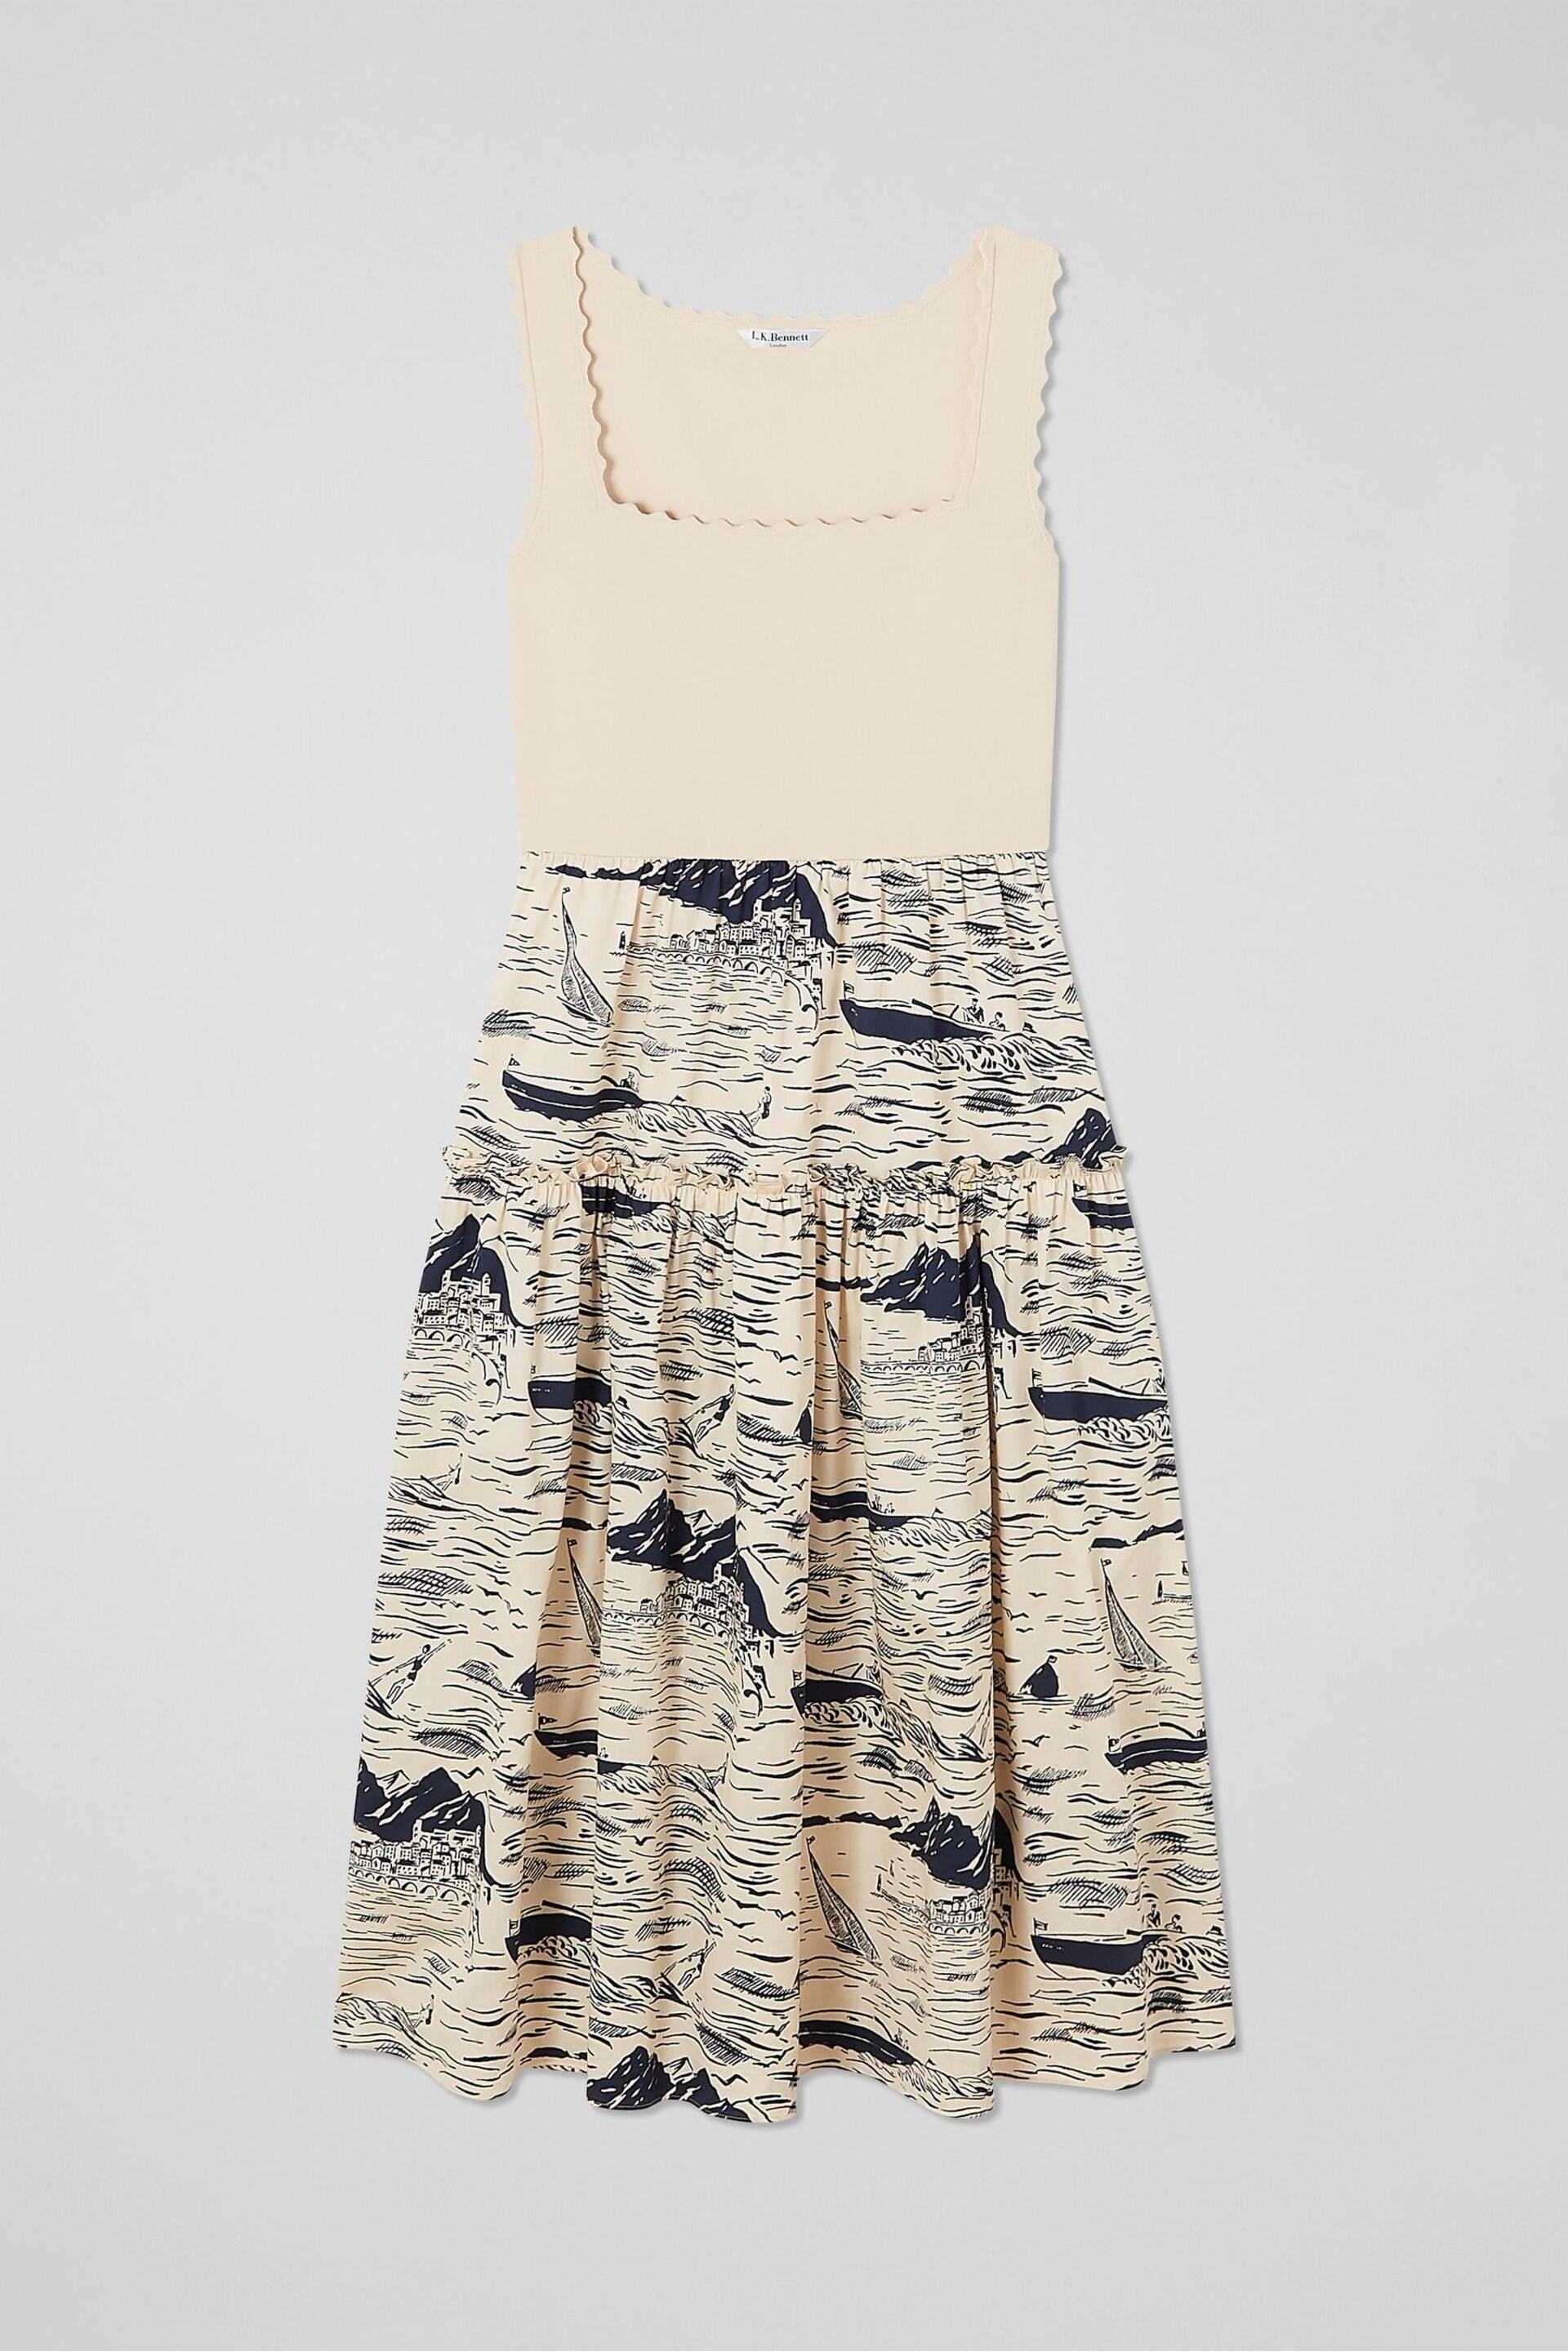 LK Bennett Crosby Cotton Blend Riviera Print Dress - Image 3 of 3